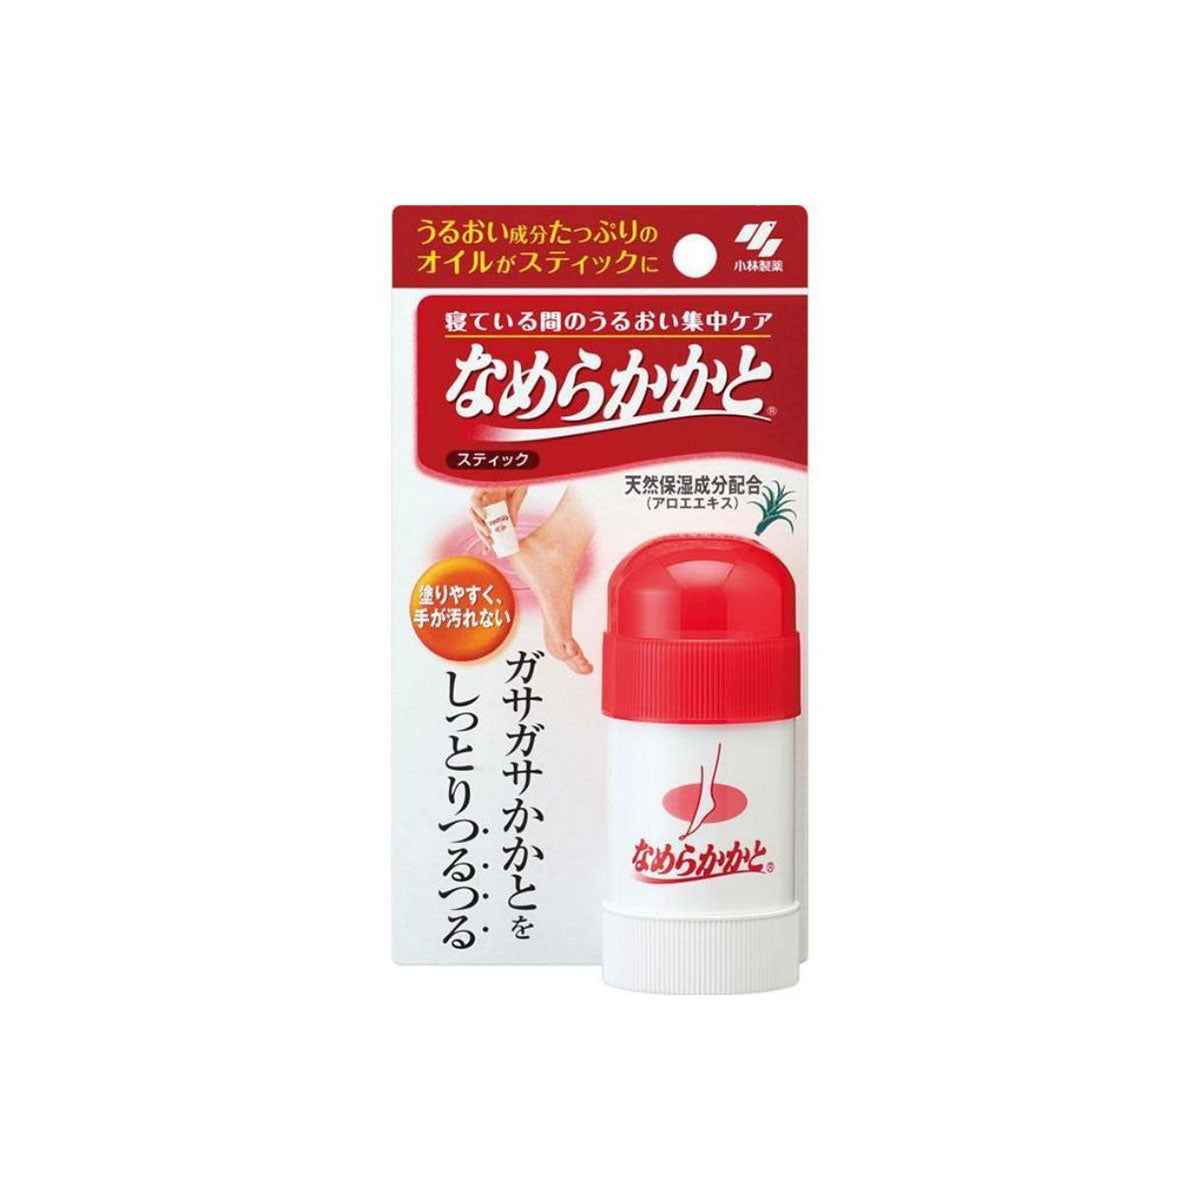 Kobayashi Crack Soften Overnight Heel Foot Gel Cream 30g